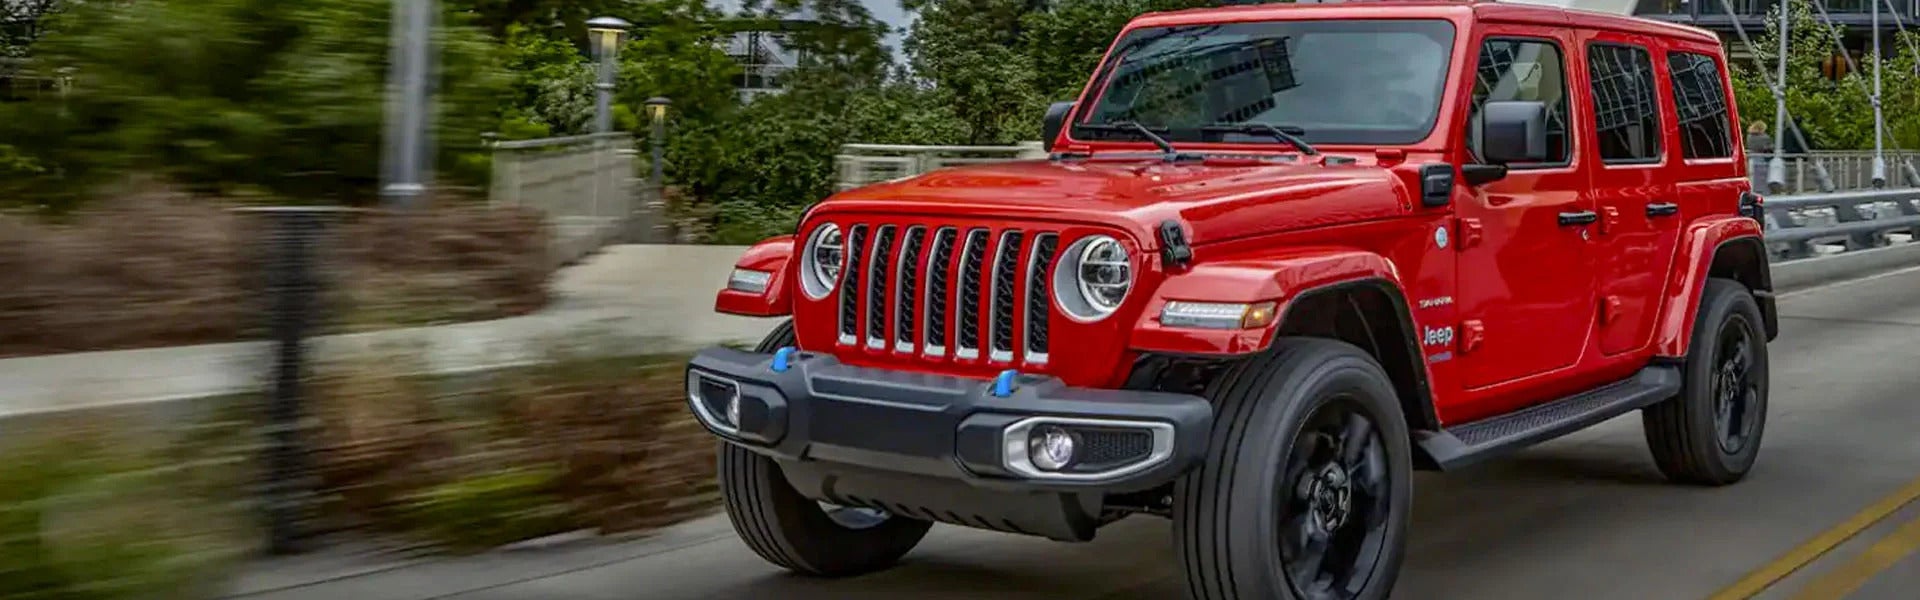 Jeep Wrangler 4xe Tax Credit Rebate Offer | Jeep Dealer Buford, GA | Mall  of Georgia Chrysler Dodge Jeep Ram